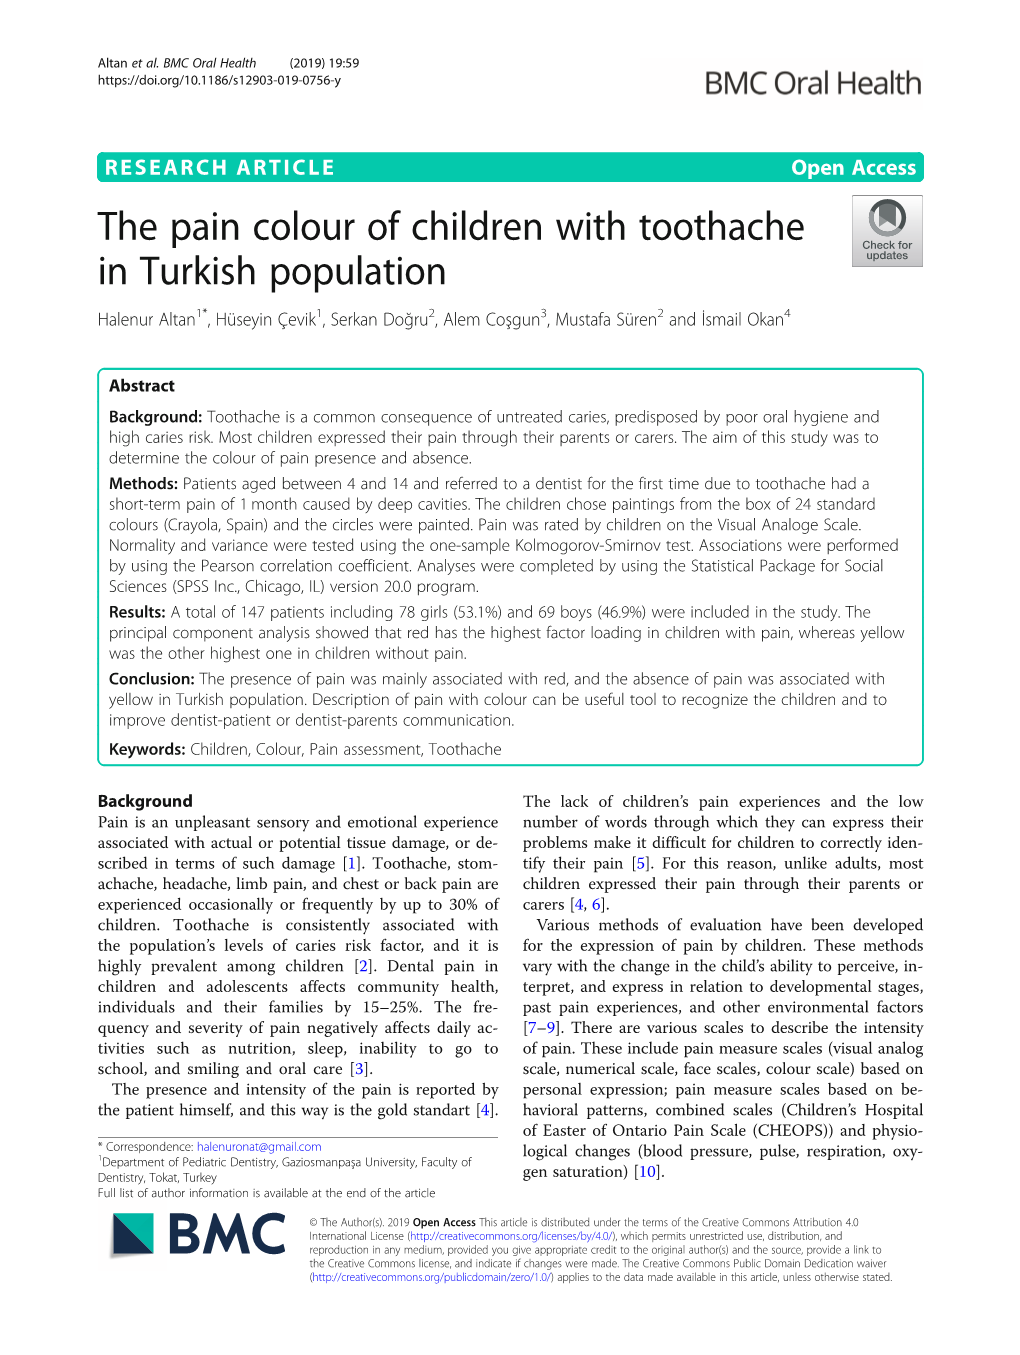 The Pain Colour of Children with Toothache in Turkish Population Halenur Altan1*, Hüseyin Çevik1, Serkan Doğru2, Alem Coşgun3, Mustafa Süren2 and İsmail Okan4